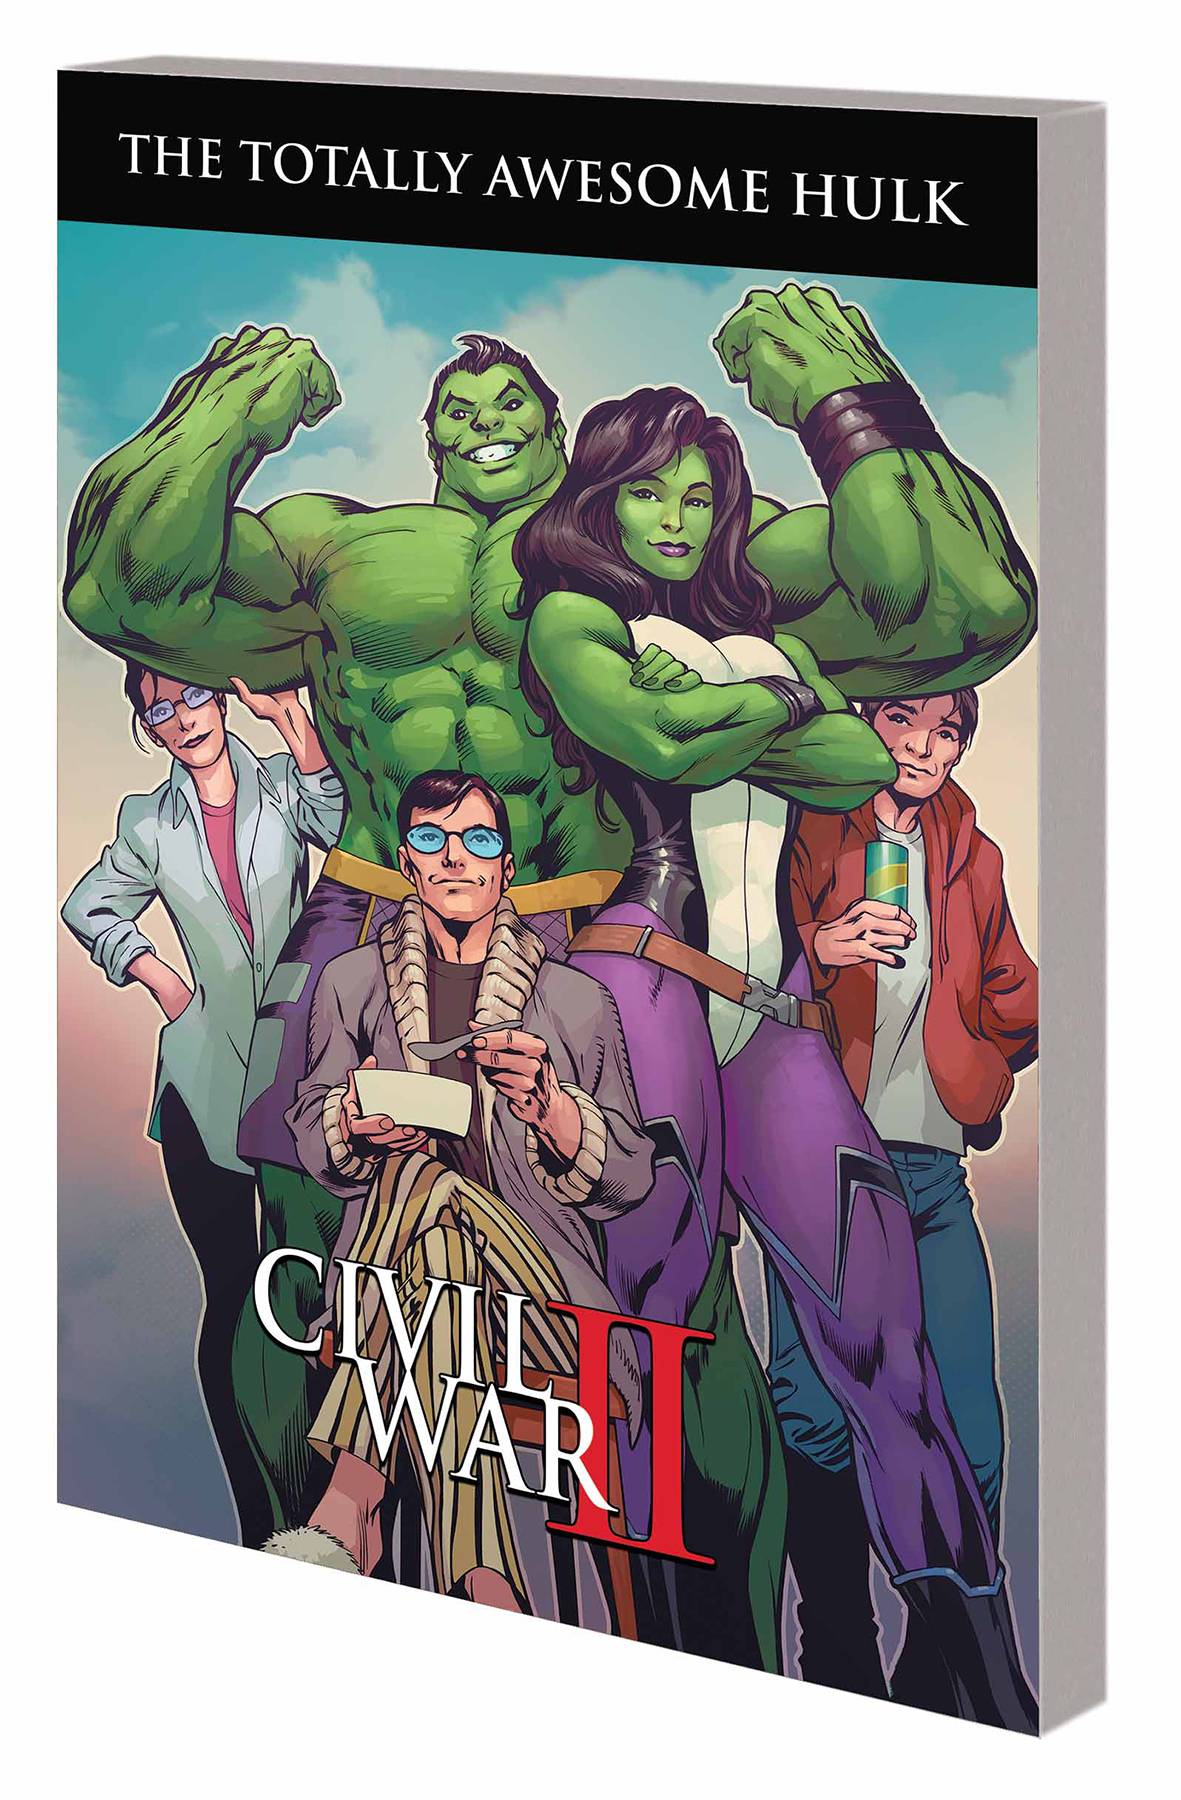 Totally Awesome Hulk vol 2: Civil War II s/c